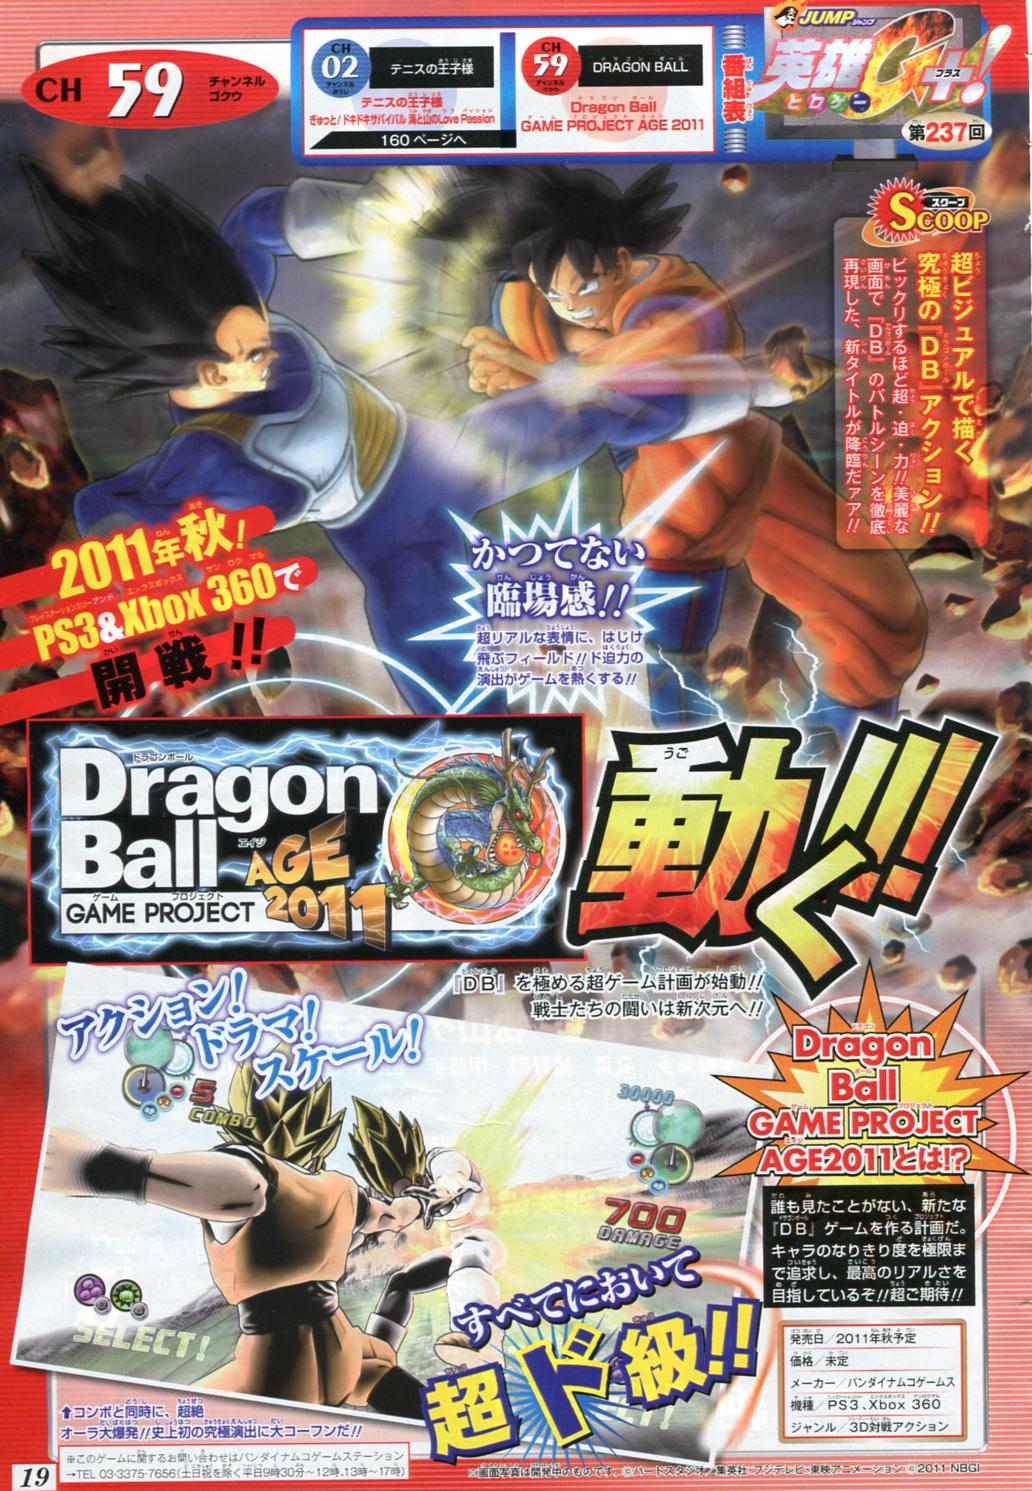 Arcade Heroes Namco releases Dragonball Zenkai Battle Royale in Japan -  Arcade Heroes